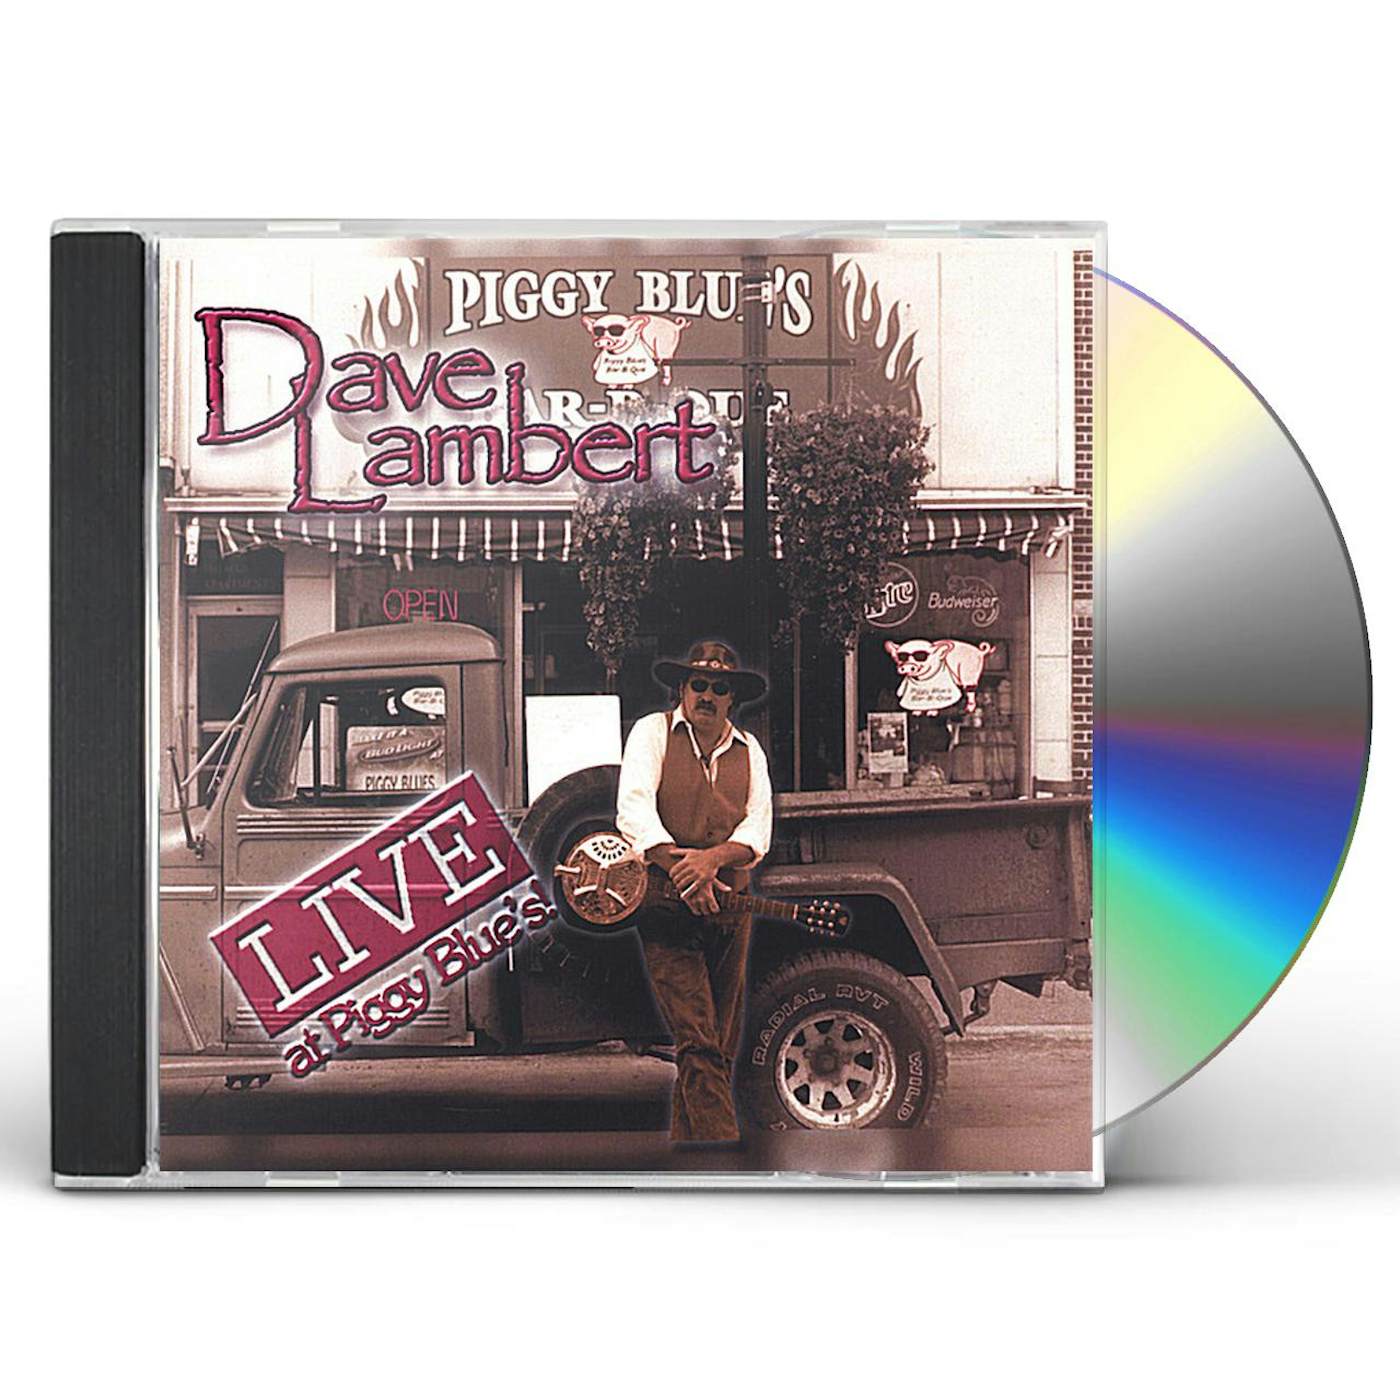 Dave Lambert LIVE AT PIGGY BLUES CD